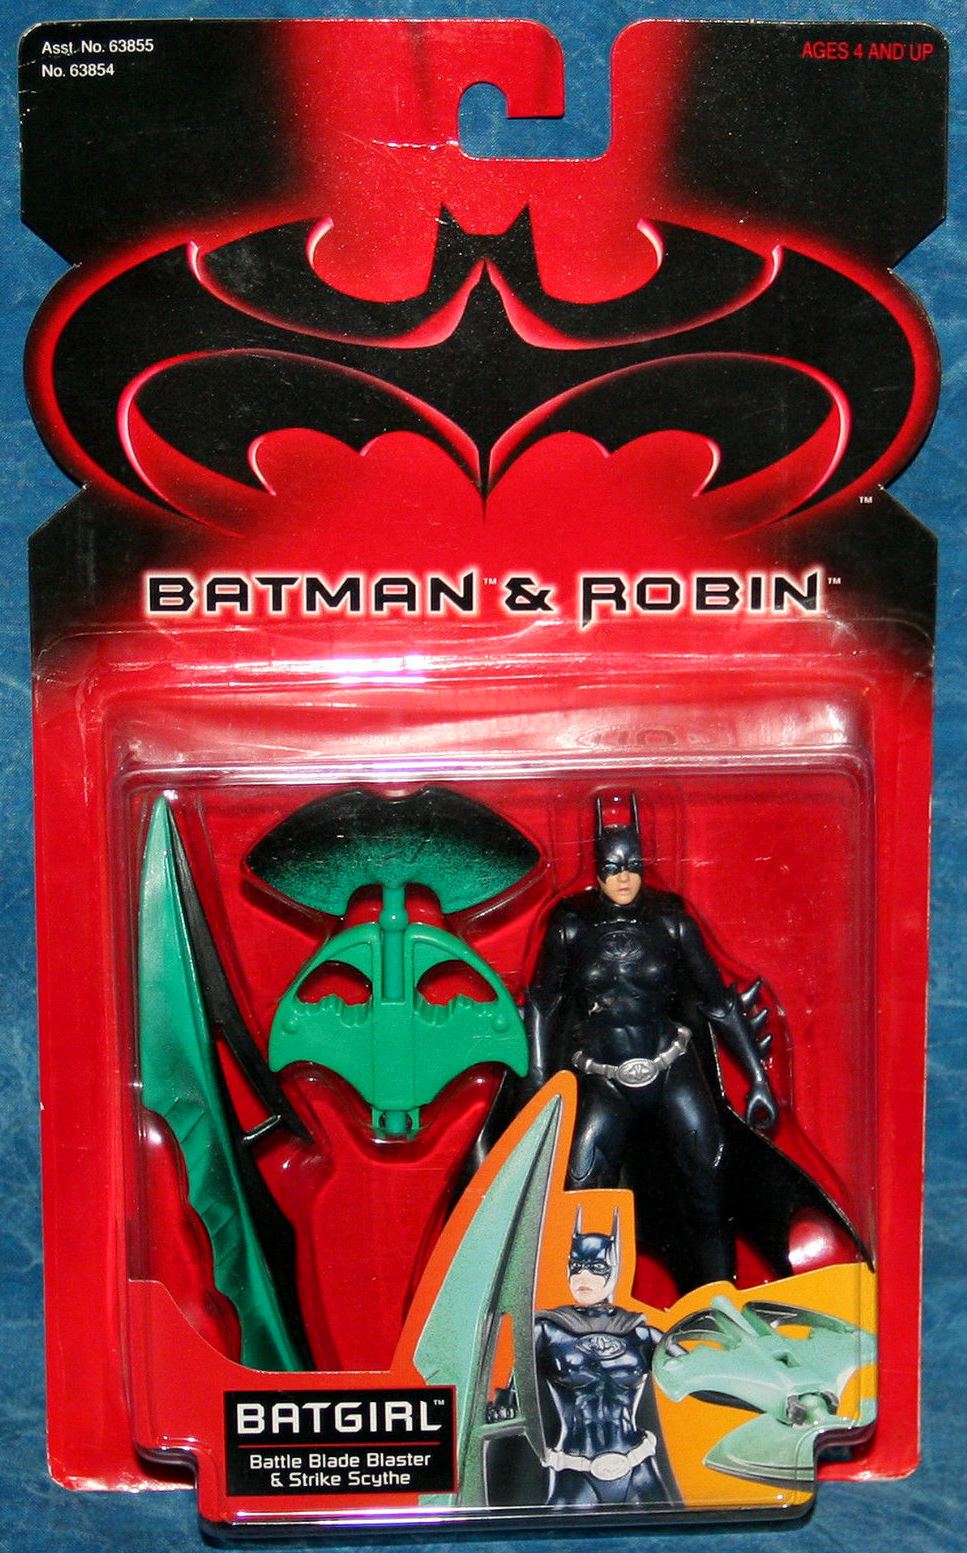 She's Fantastic: Batman & Robin - BATGIRL!